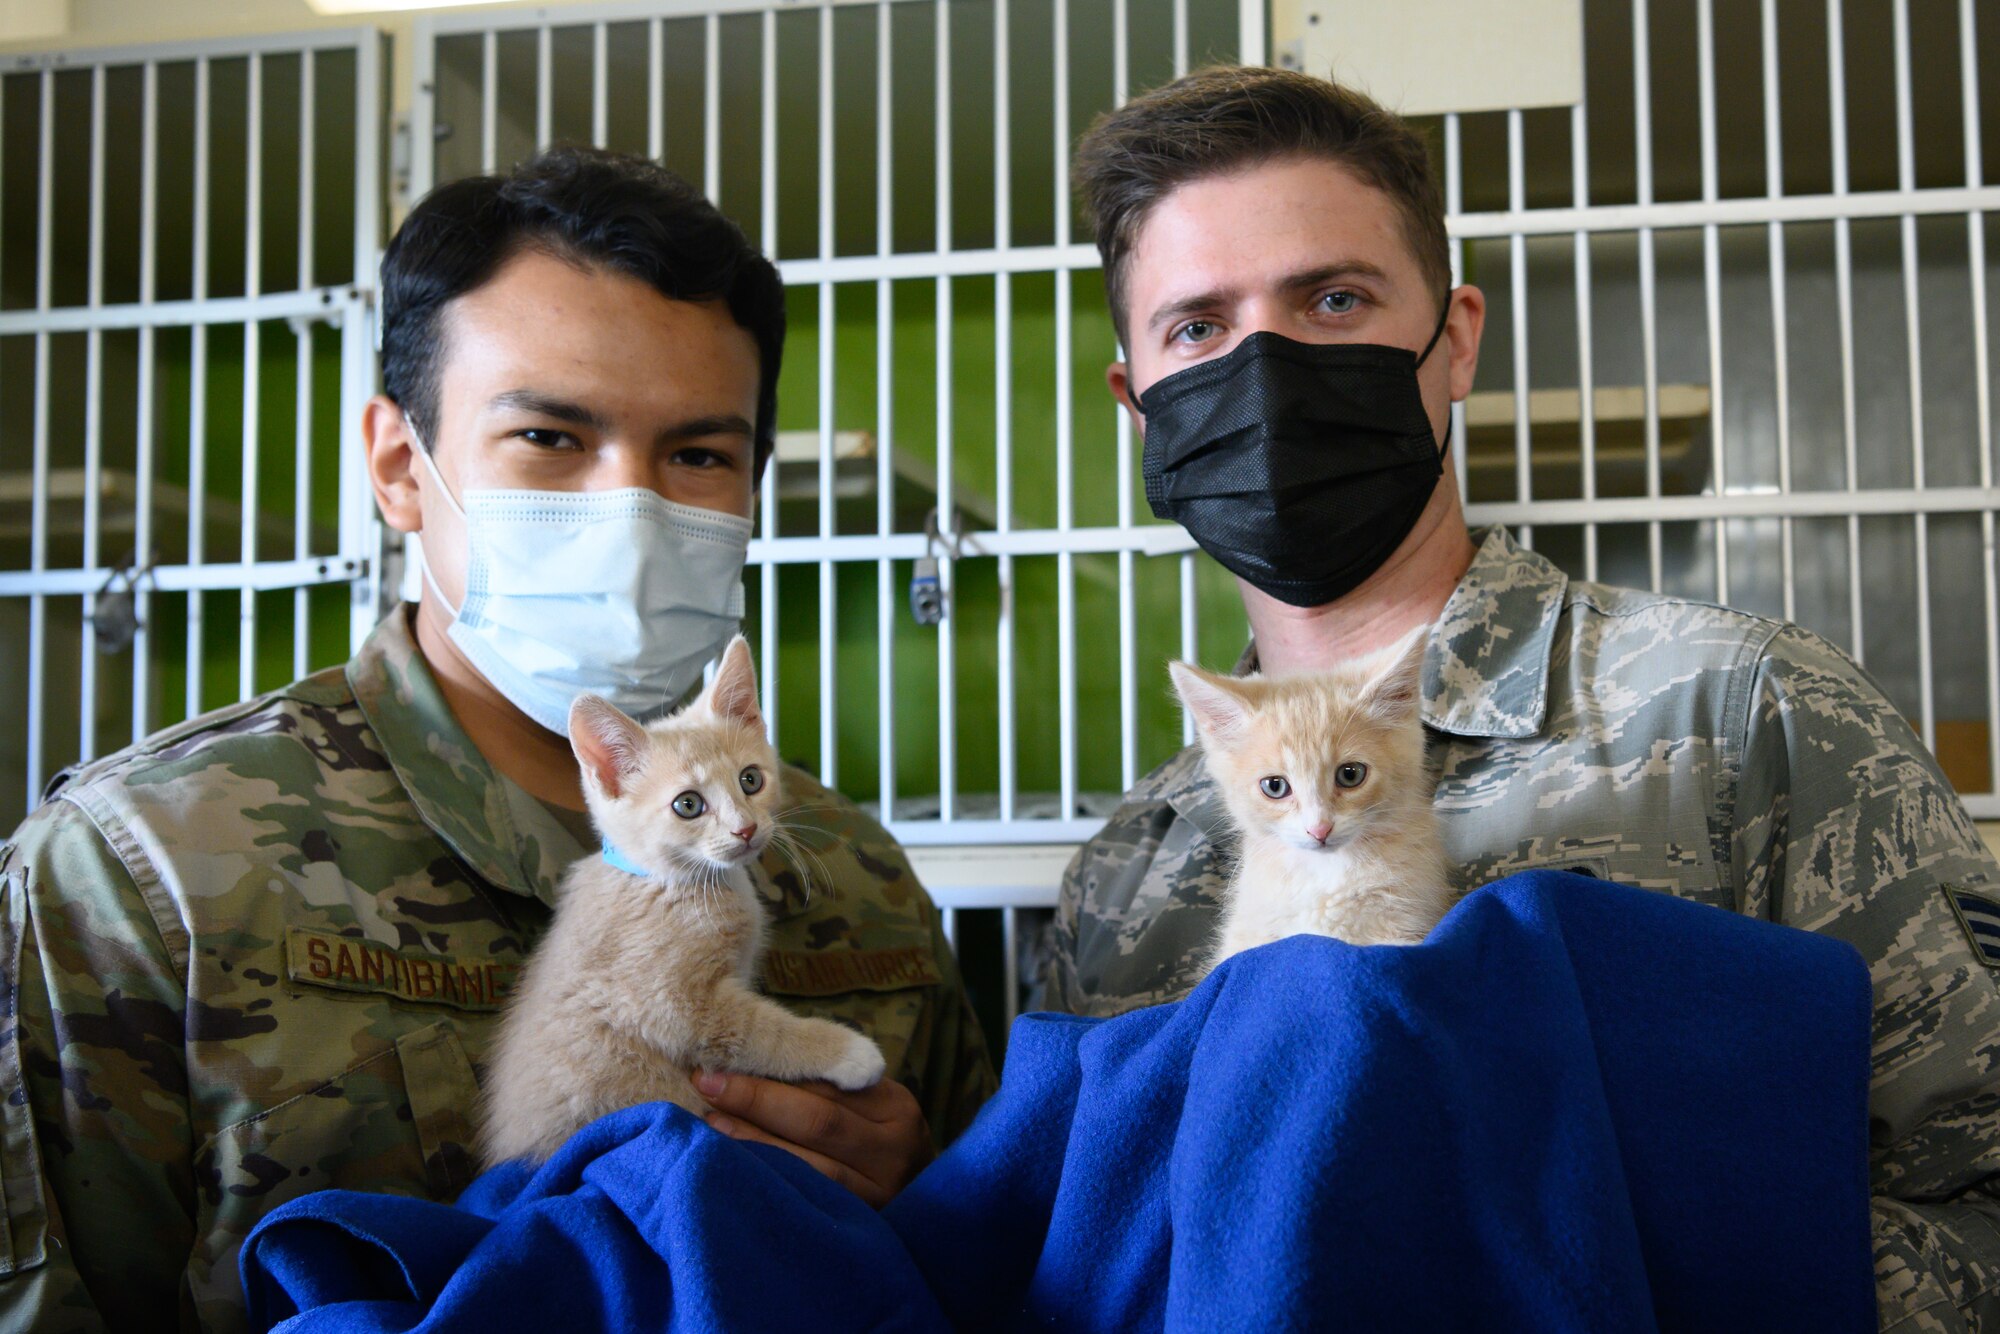 Airmen petting kittens